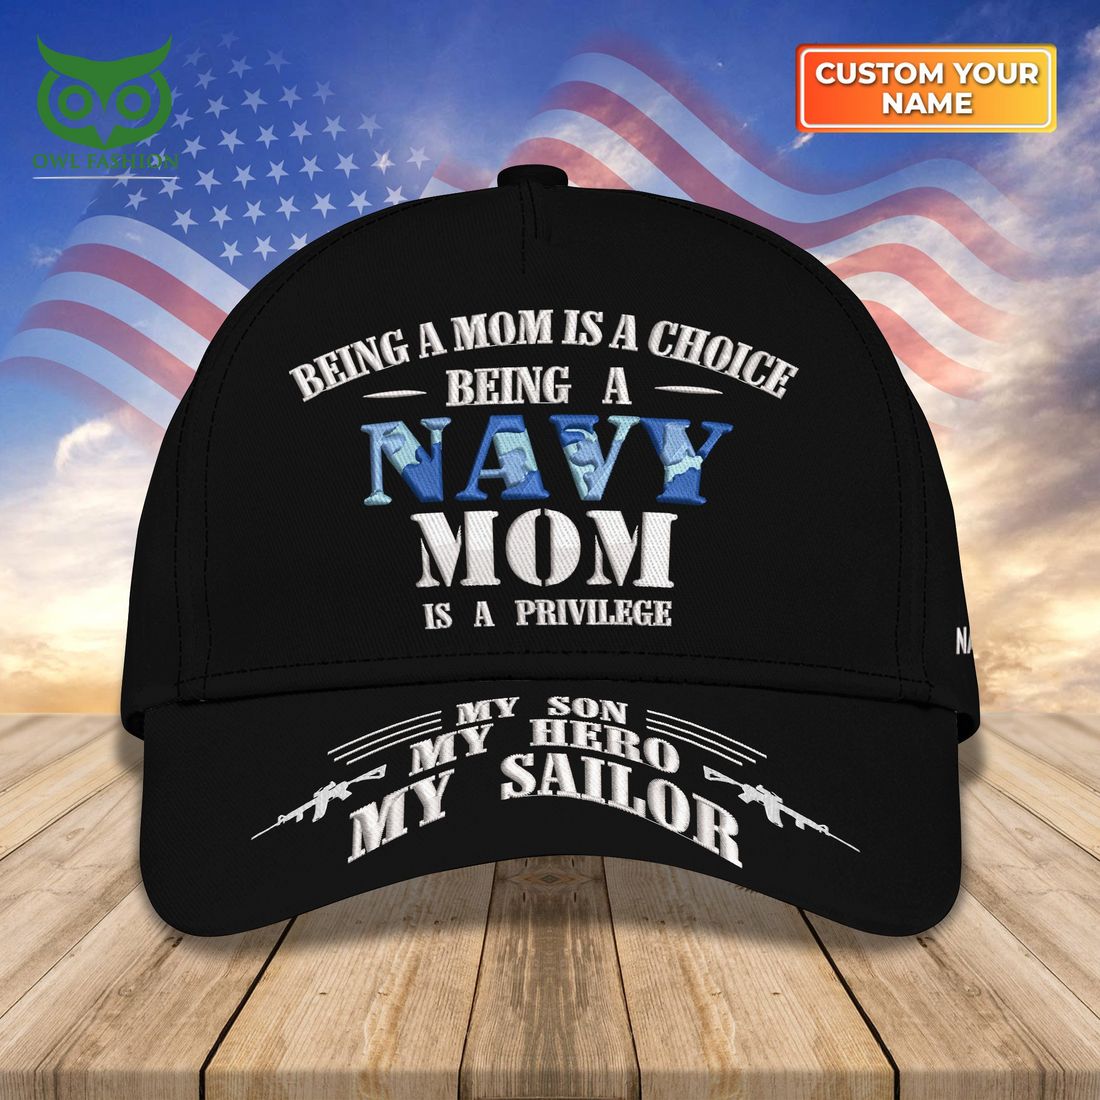 custom name embroidery us navy mom proud navy mom classic cap 1 vmWnx